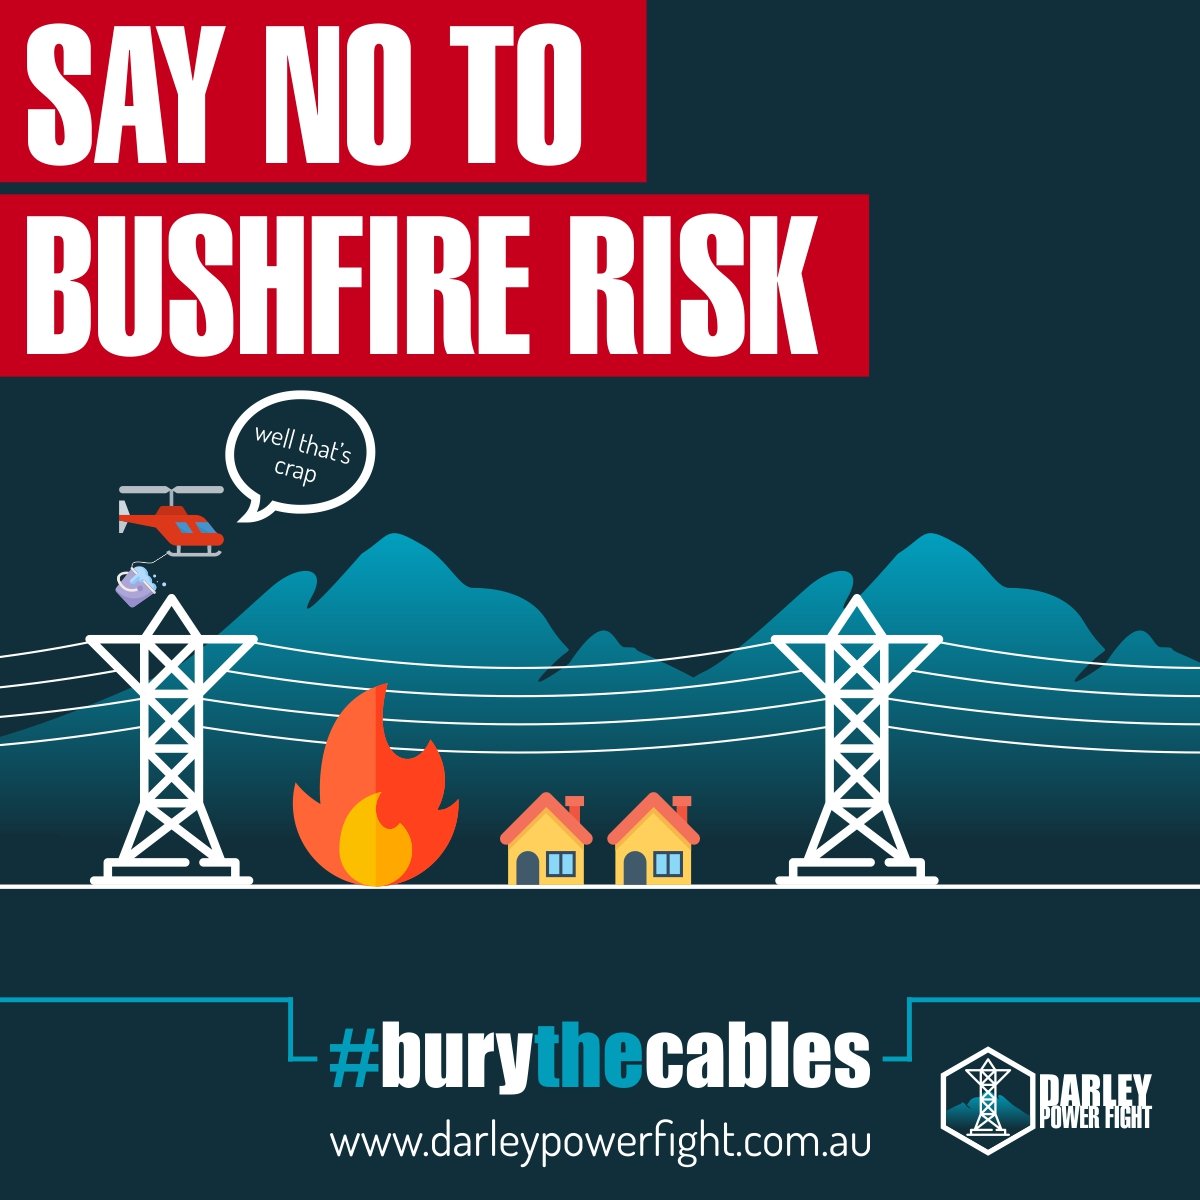 Bushfire Risk Darley Power Fight